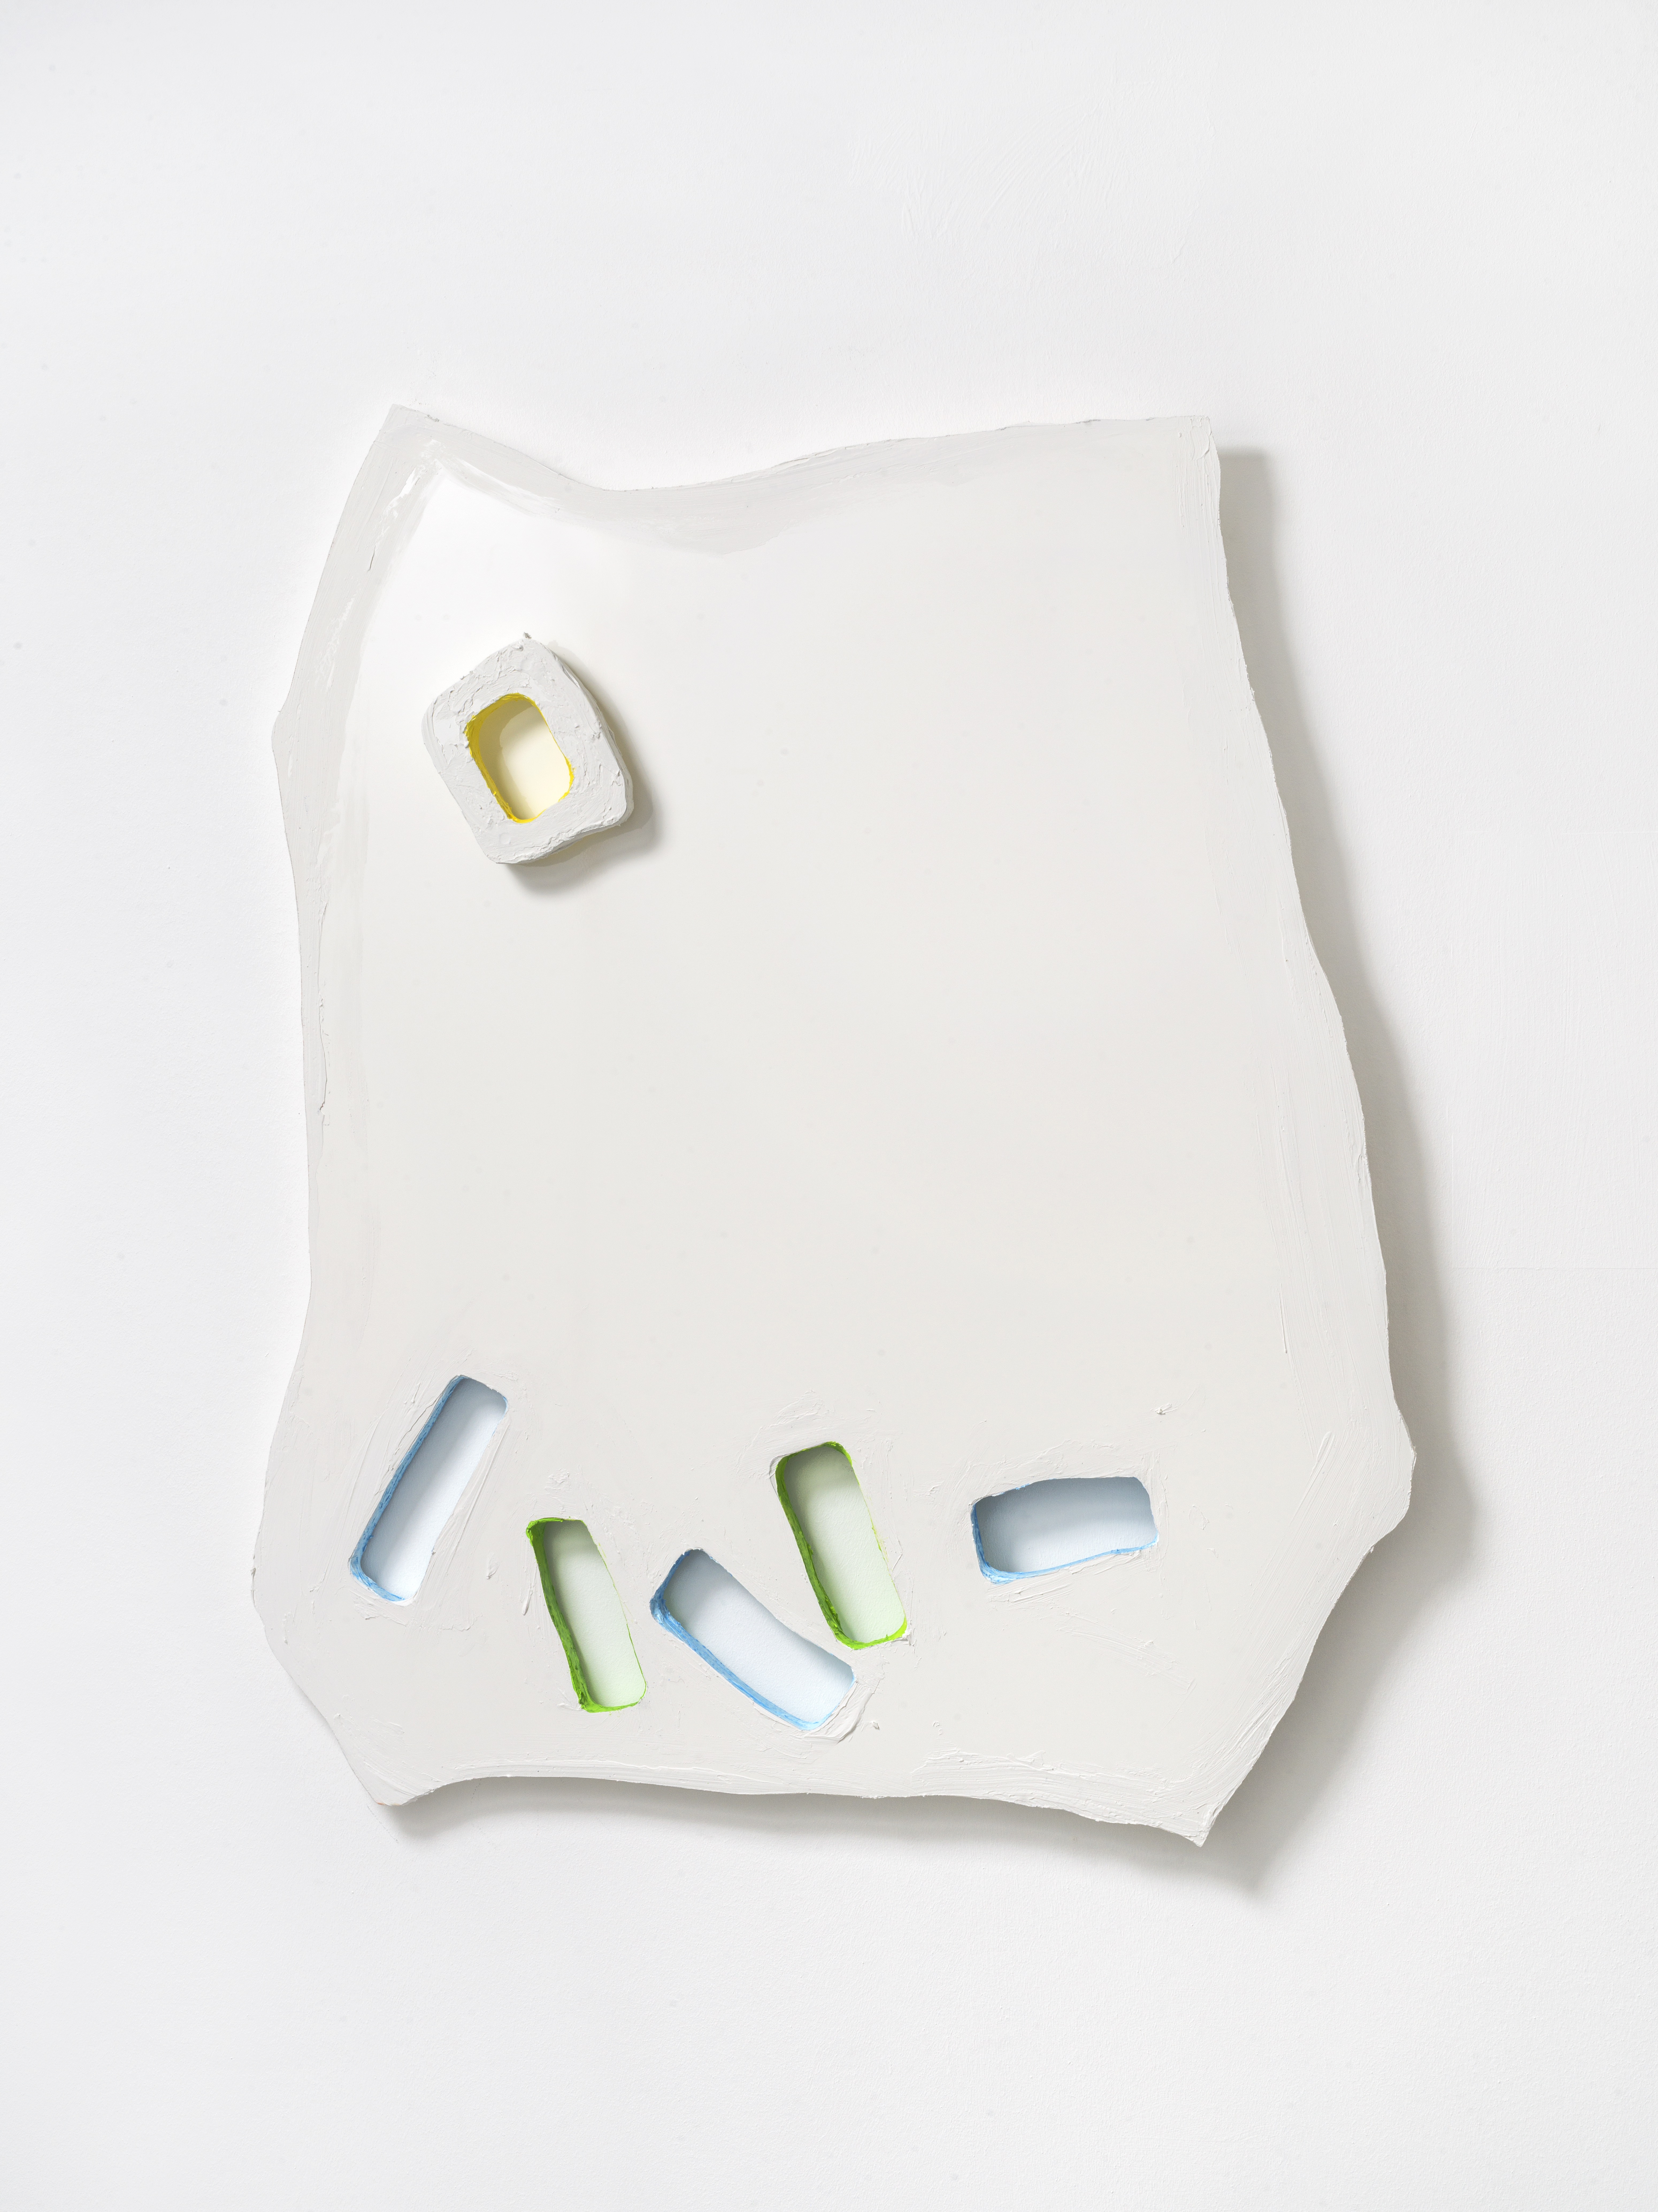 1. Adrian Altintas - AAD021 - 2021 - Untitled 101,5 x 118,5 x 6,5 cm. - Sandwichpanel, Acryl.